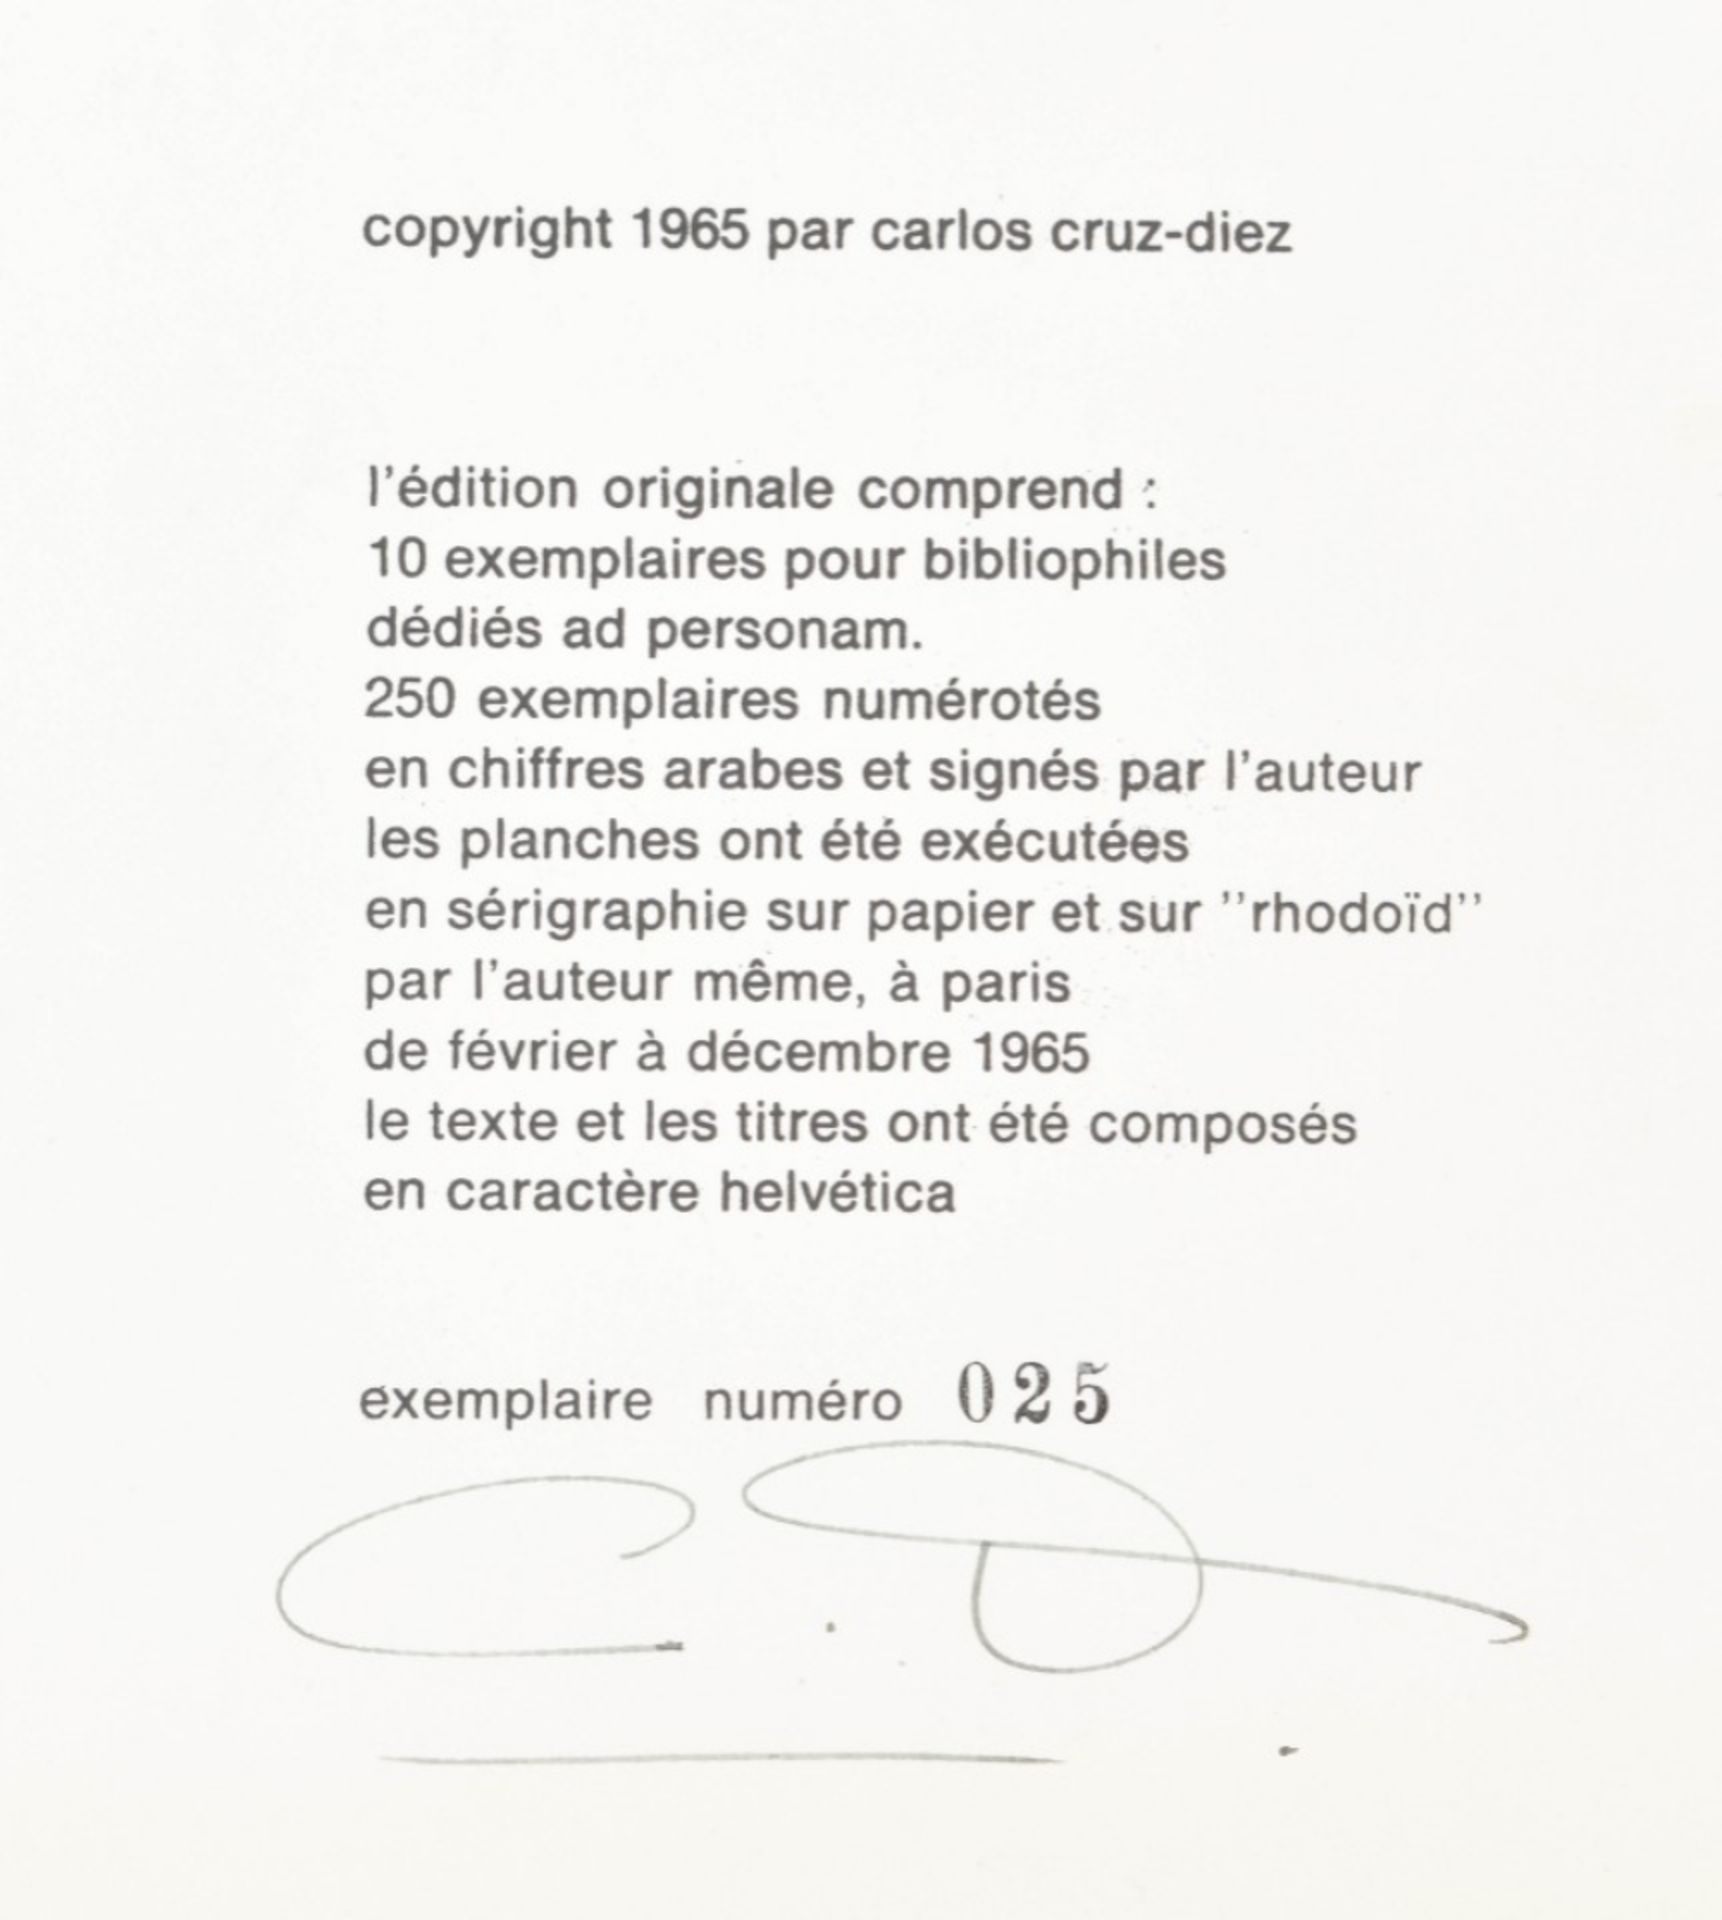 [s and 1970s] Carlos Cruz-Diez, Transchromies - Image 3 of 5